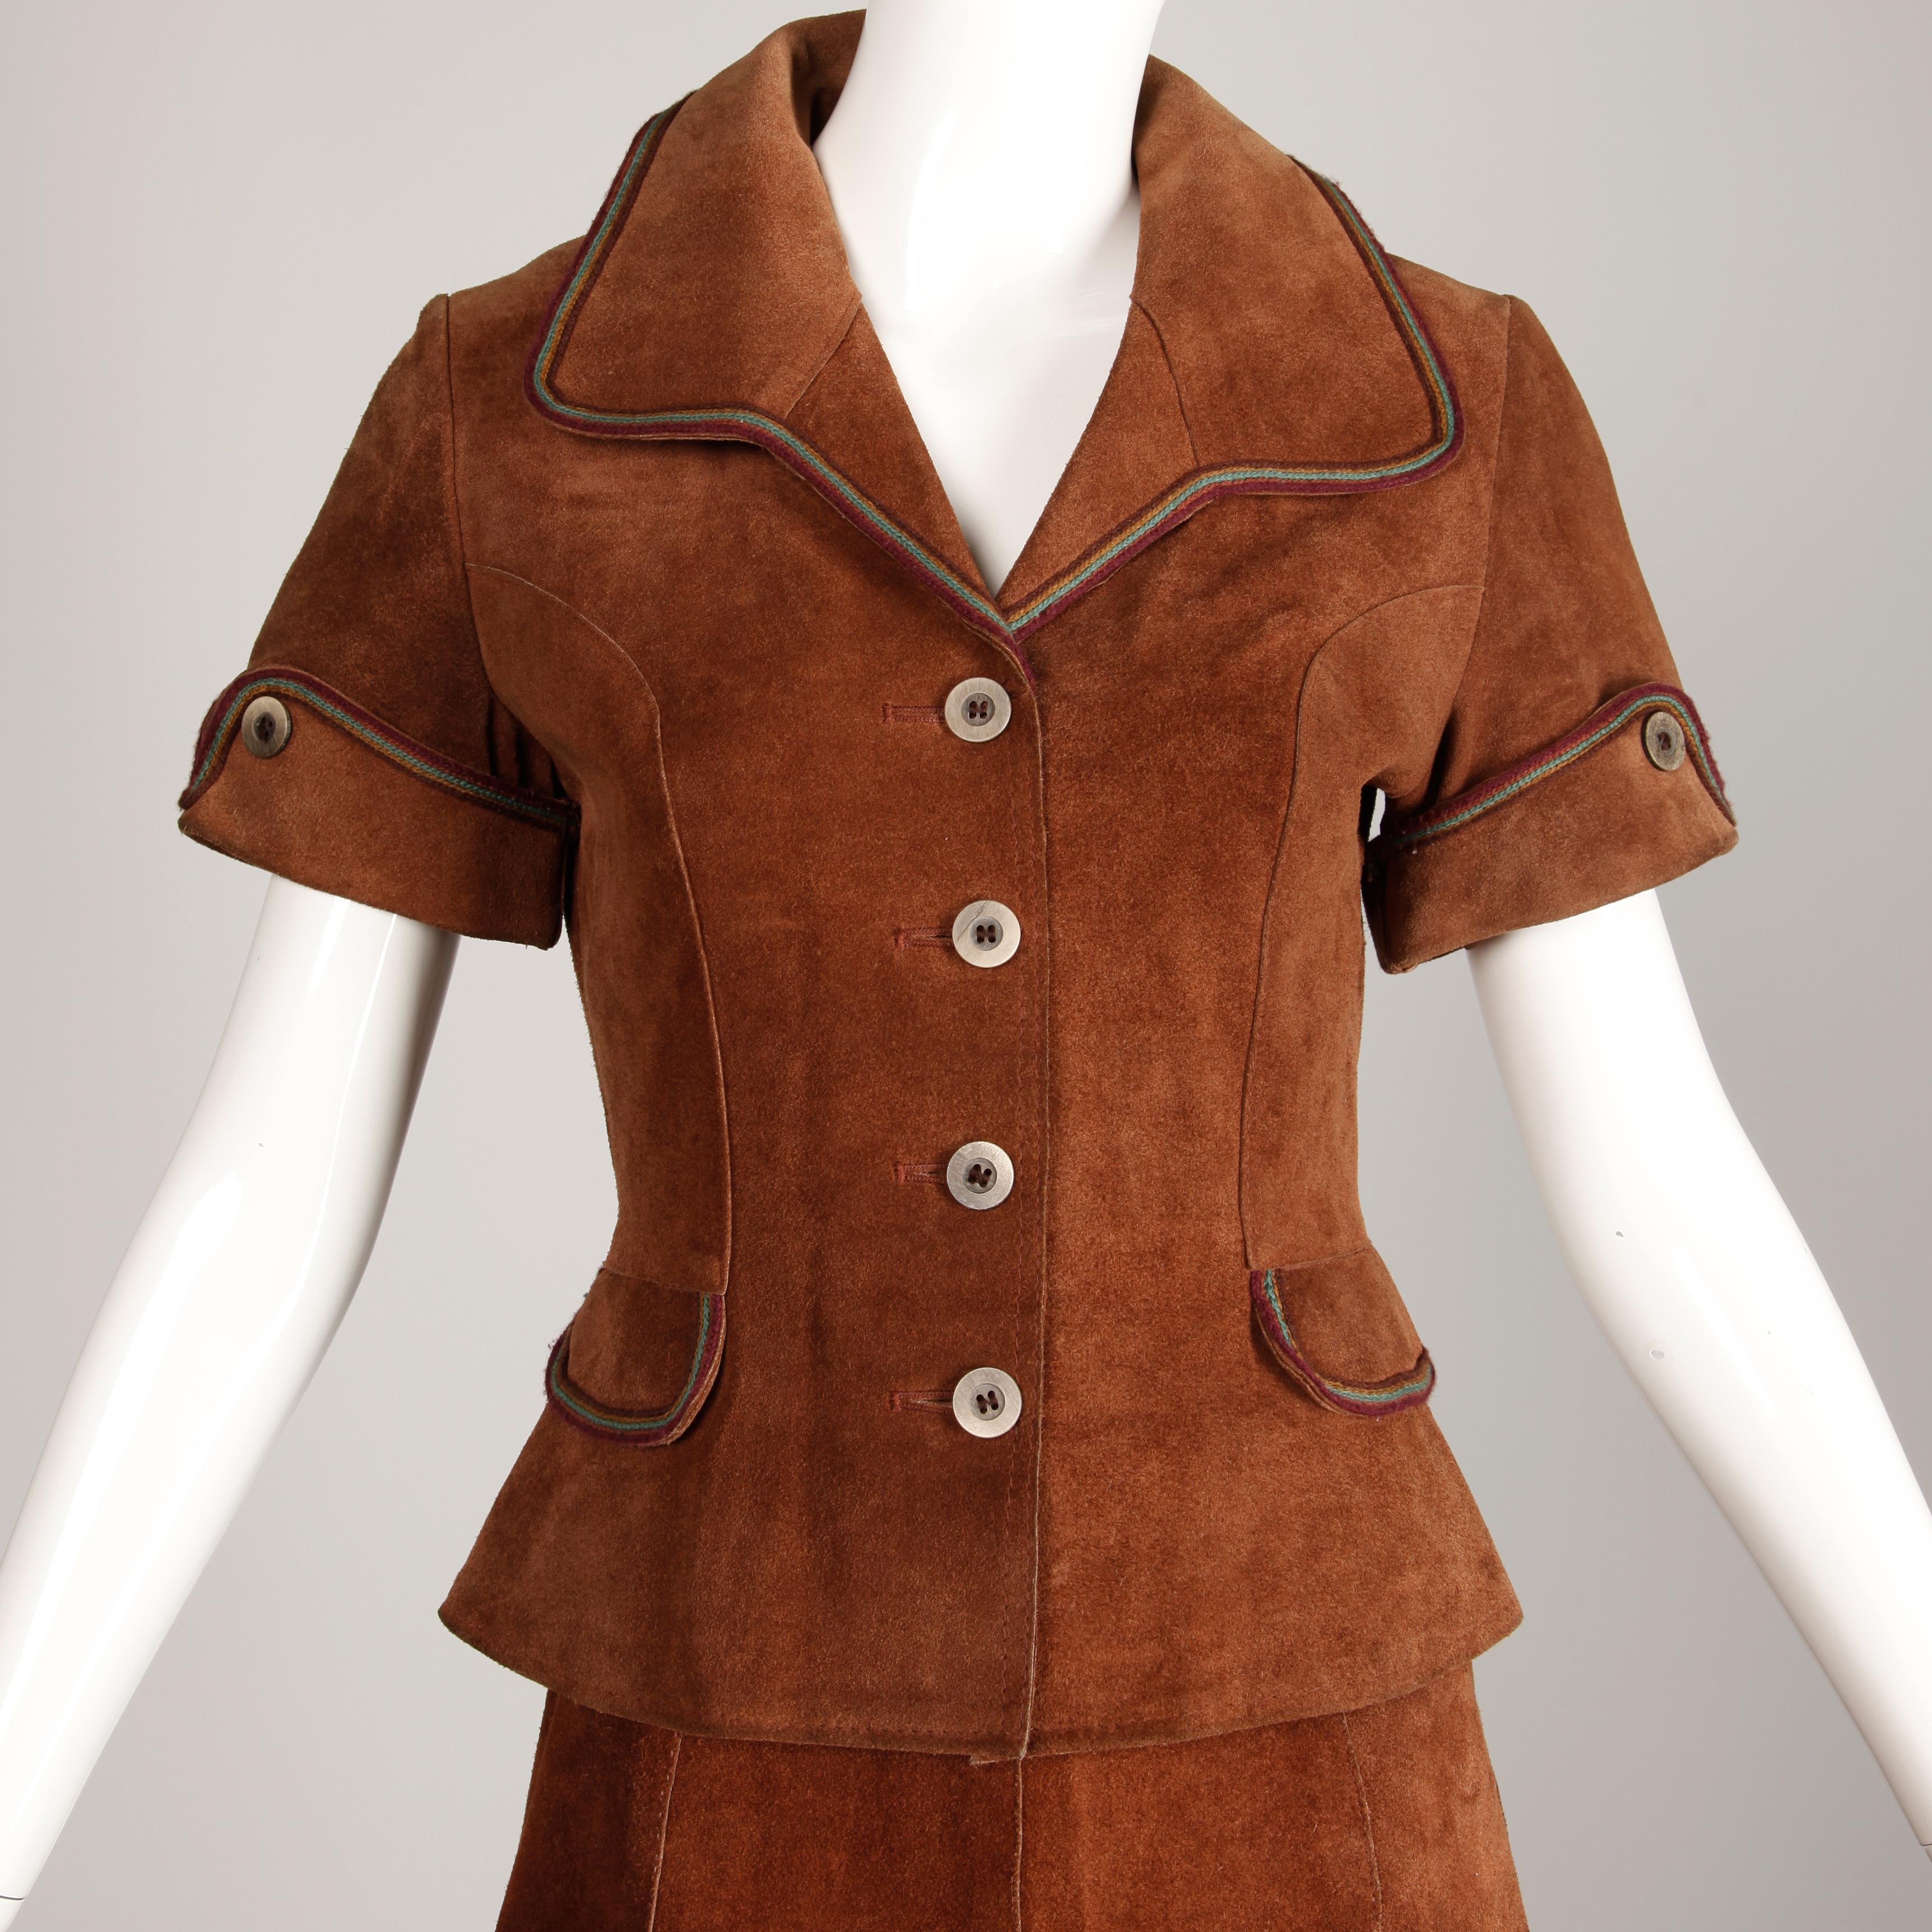 Women's 1970s Vintage Suede Leather Jacket + Skirt Ensemble For Sale